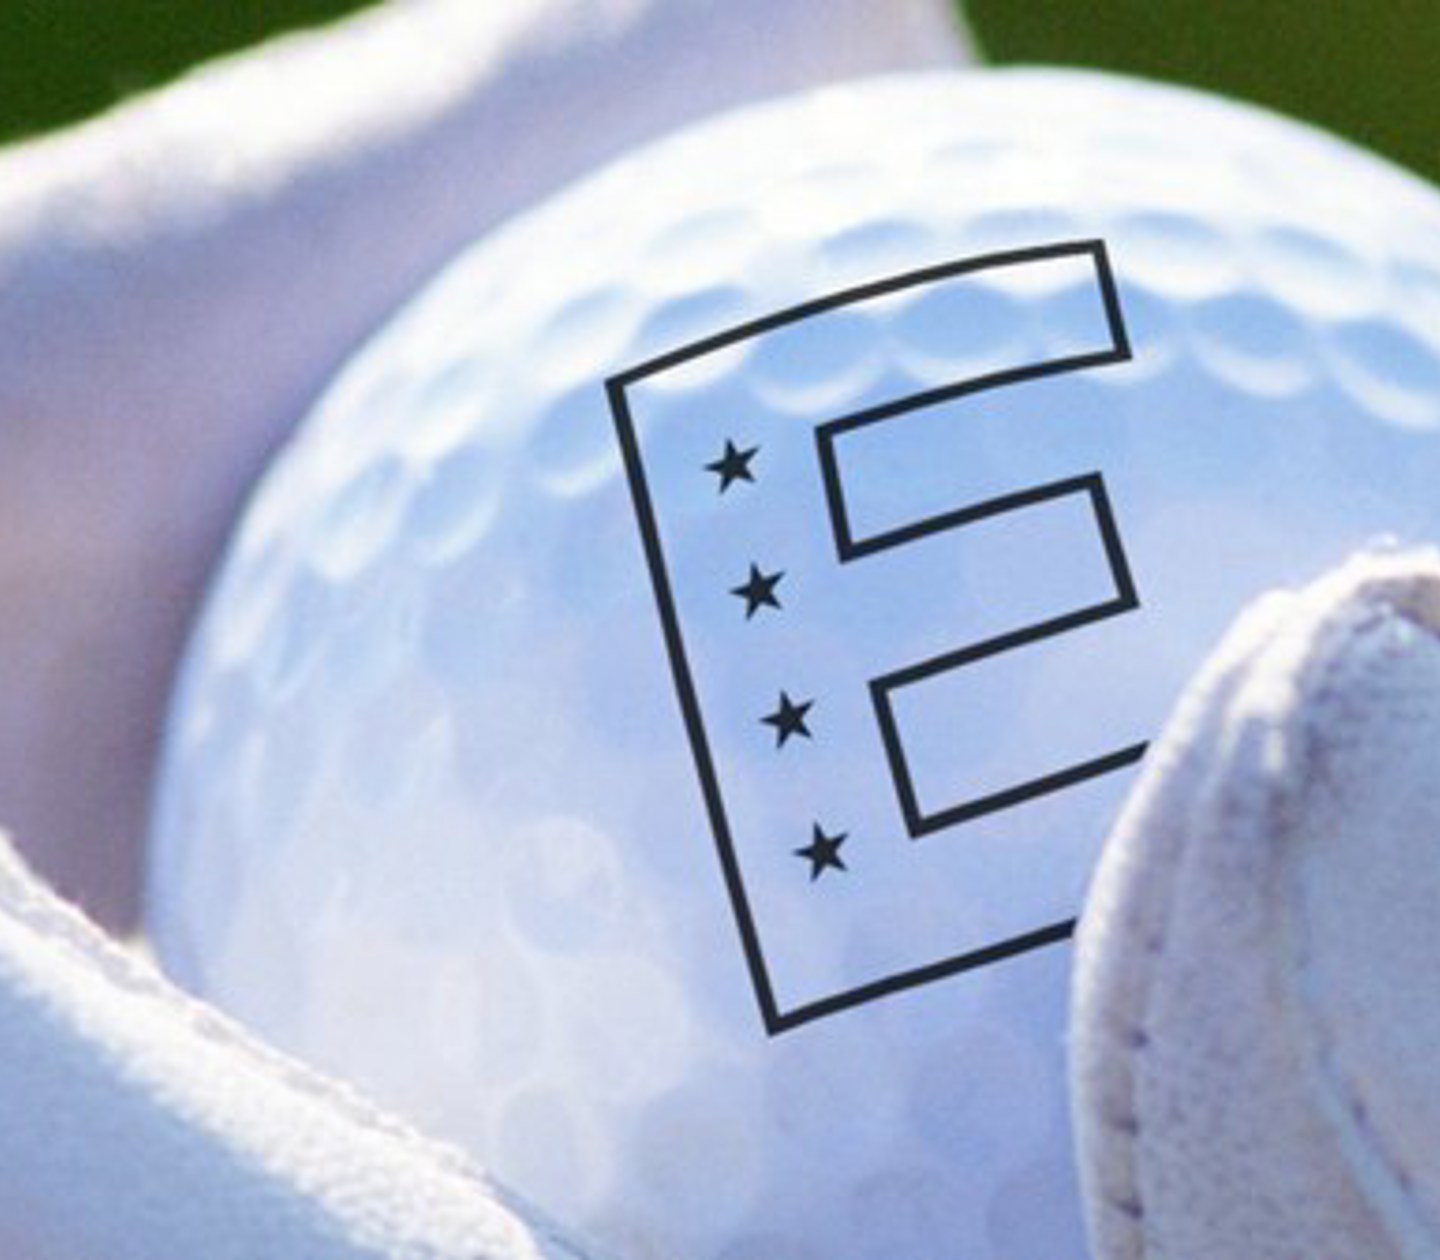 Golf ball with Elite Hotel logo